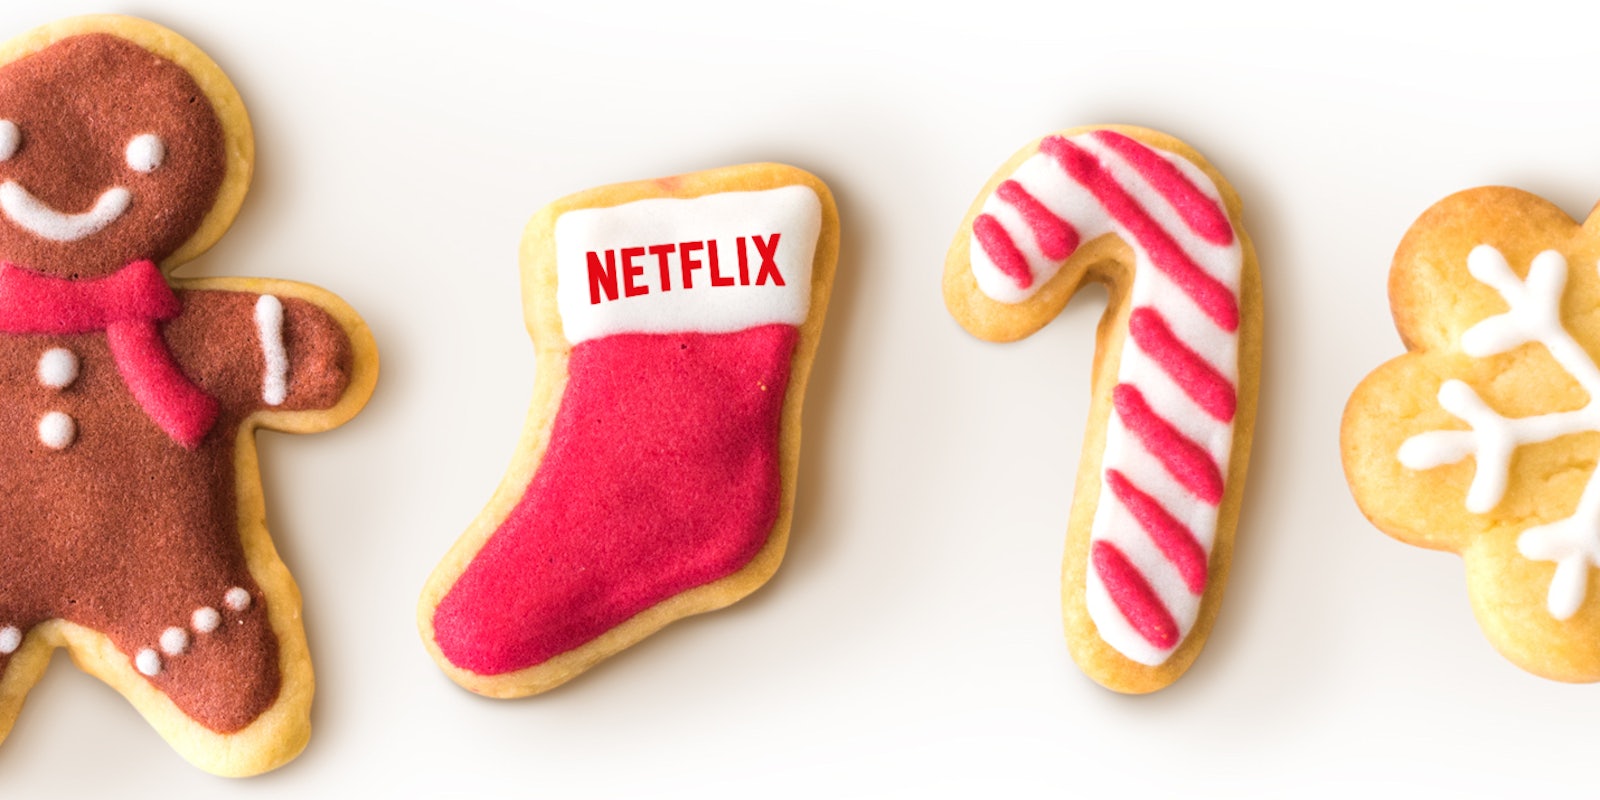 original Christmas movies on Netflix in 2019